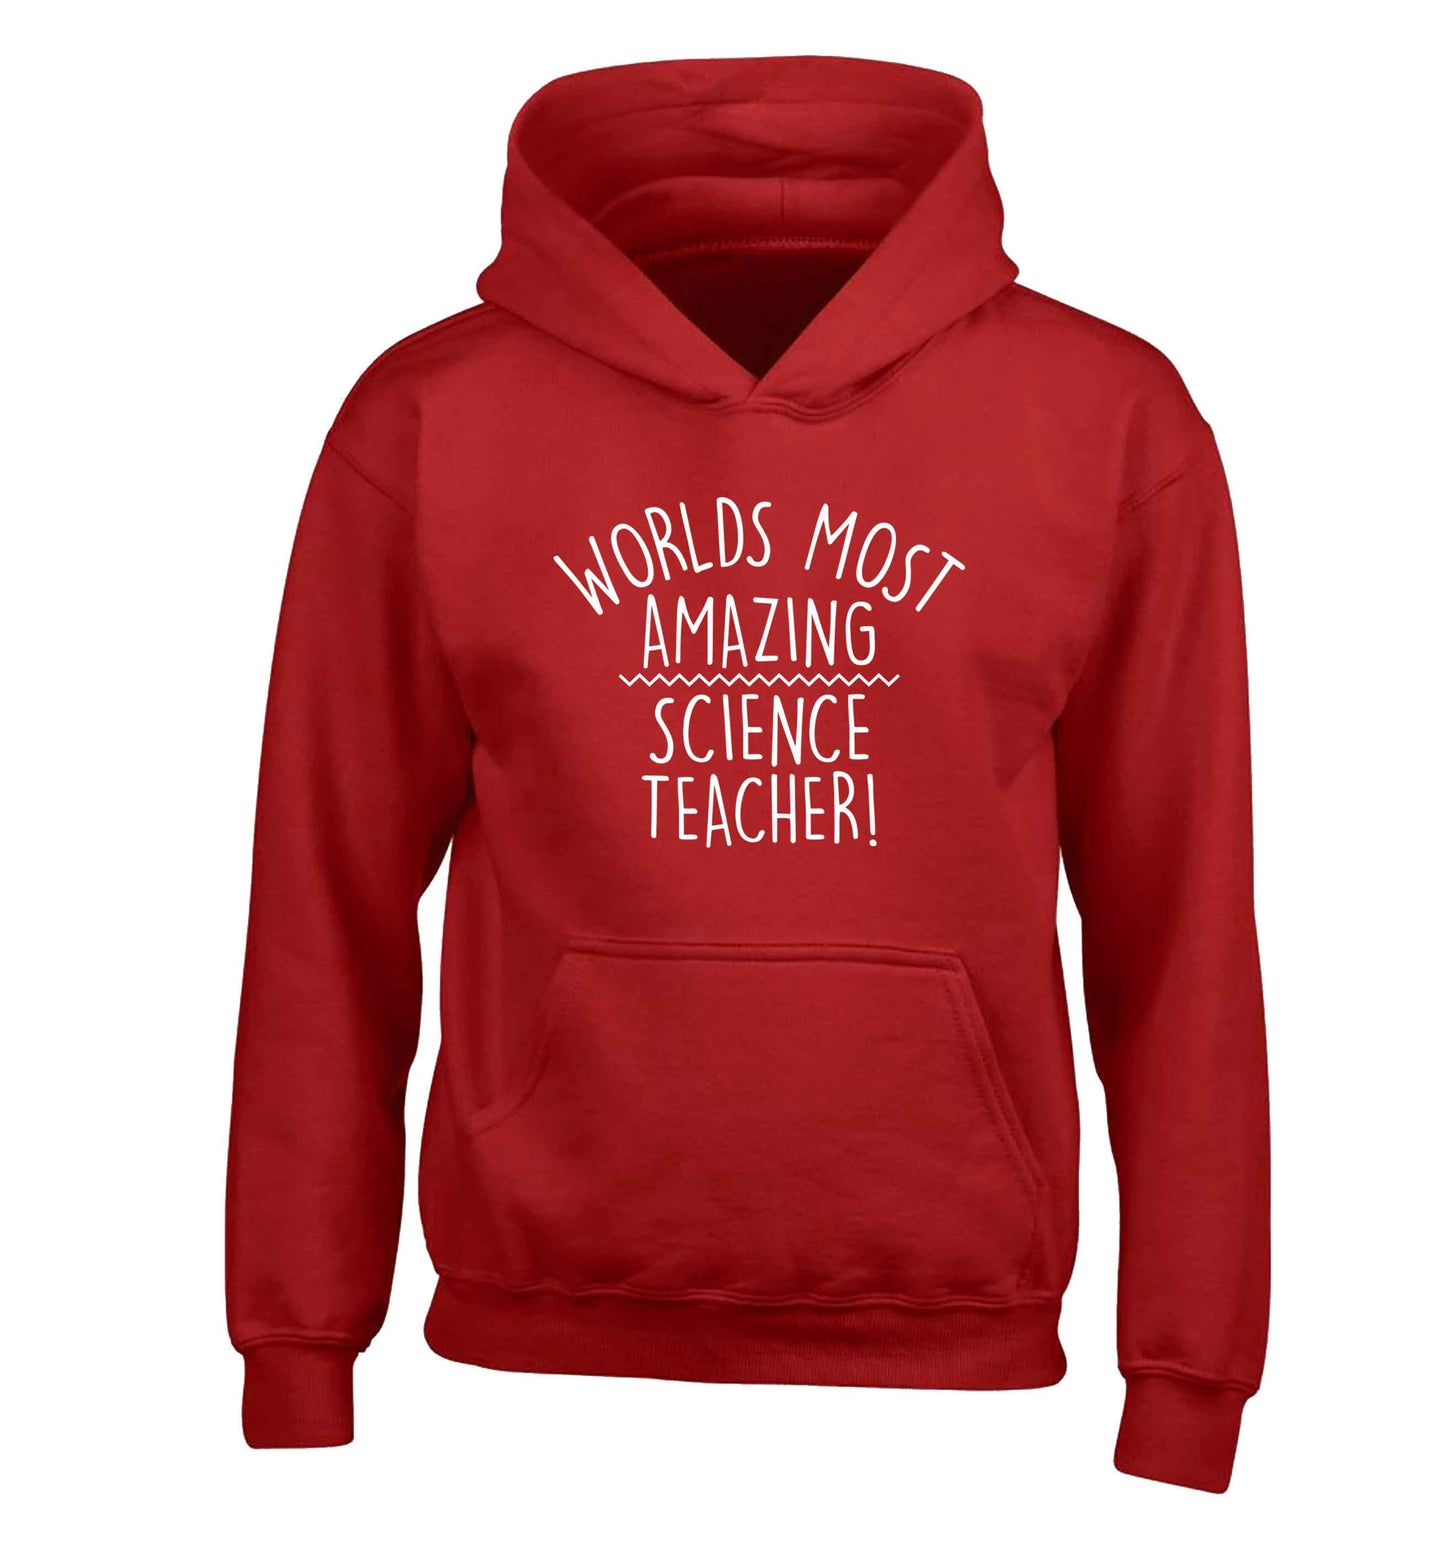 Worlds most amazing science teacher children's red hoodie 12-13 Years